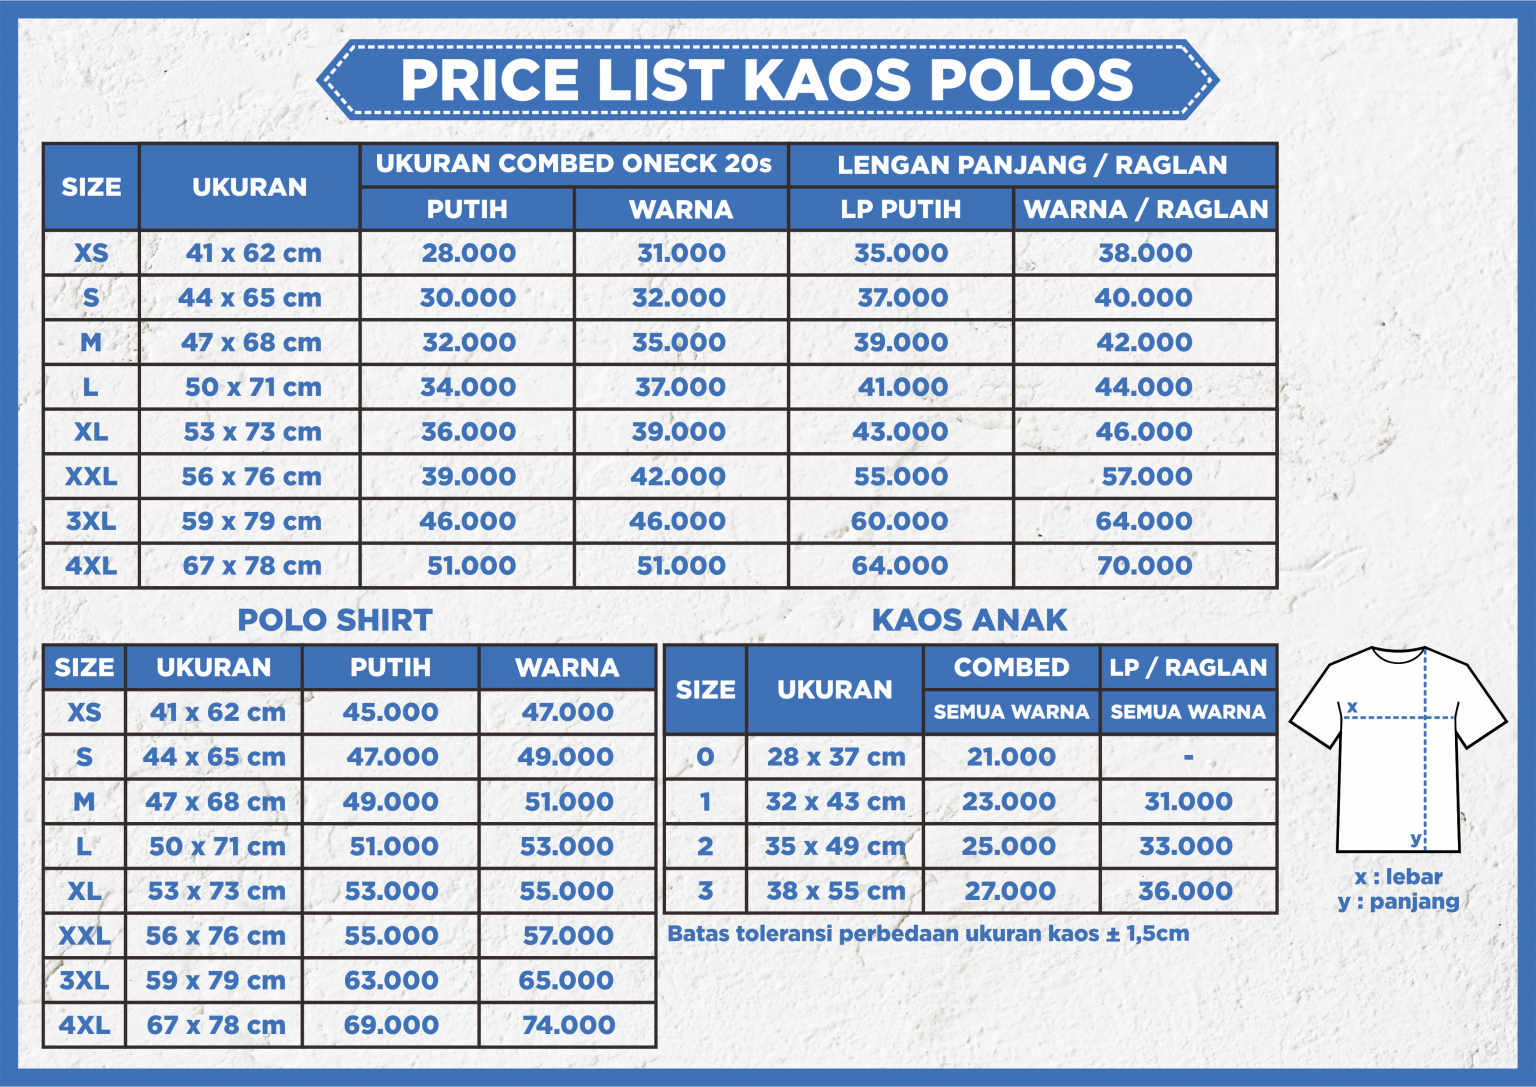 PRICE-LIST-KAOS-POLOS-new-1536x1087